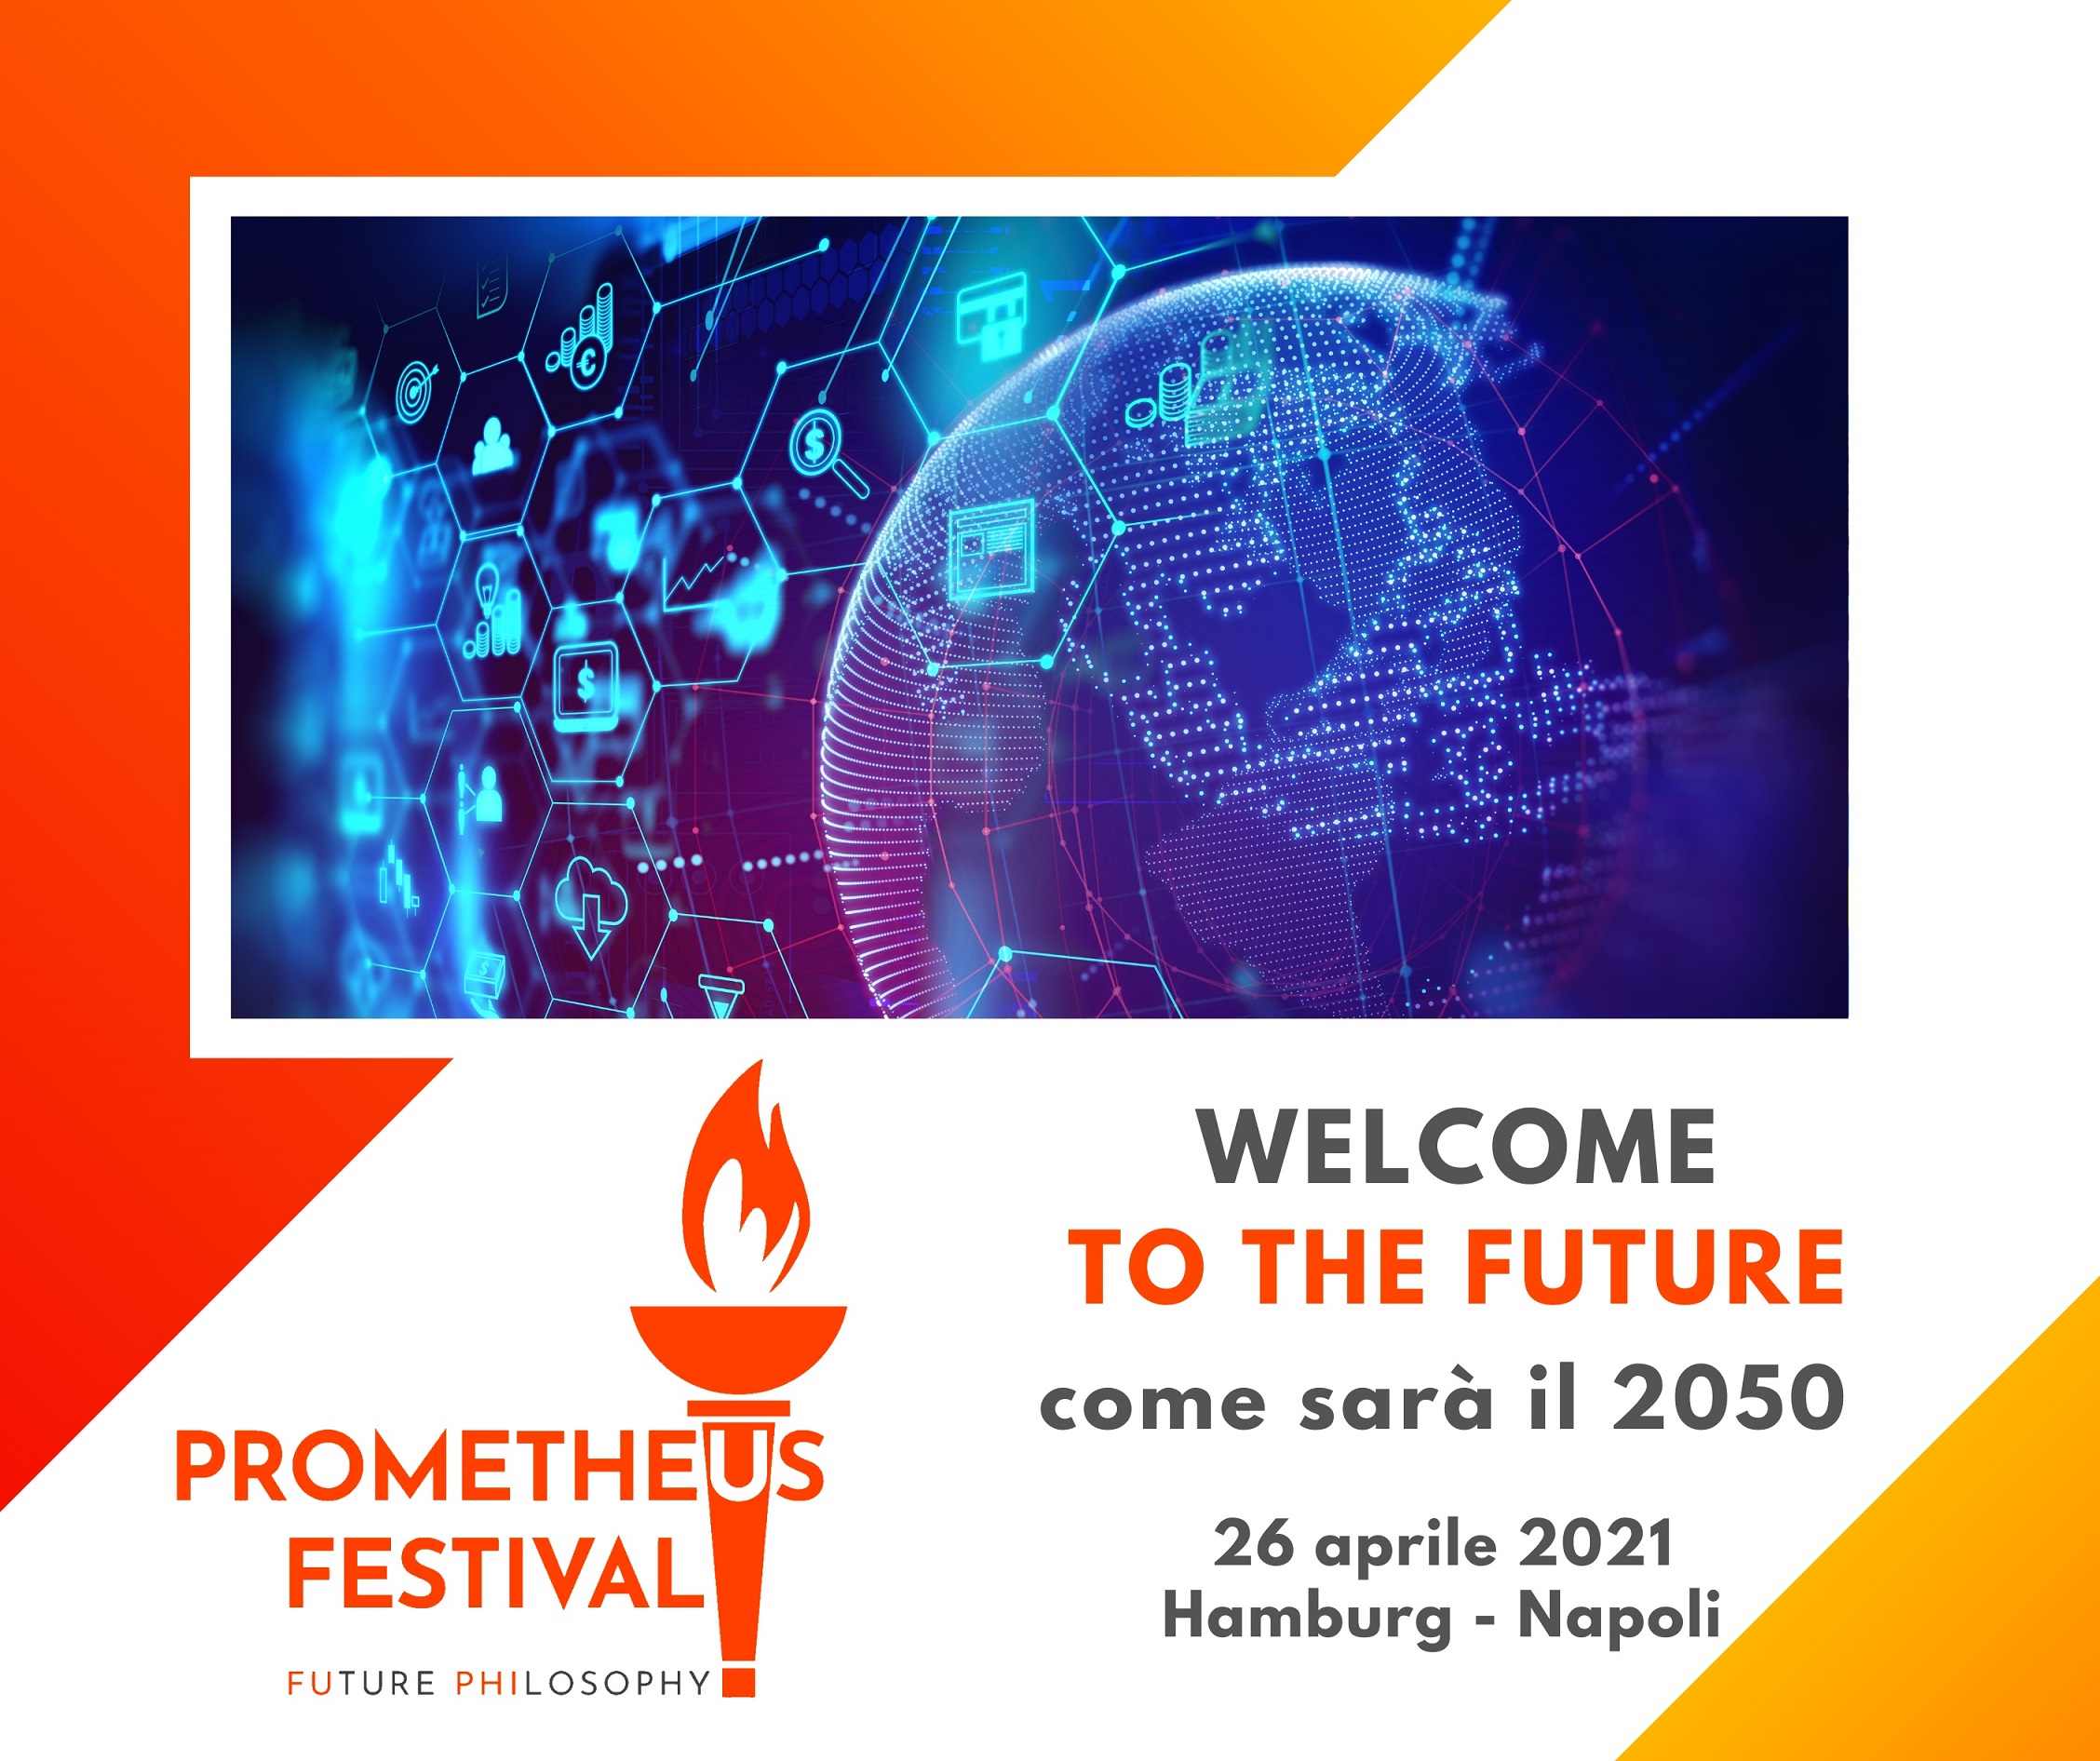 Prometheus Festival 26 aprile 2021 foto